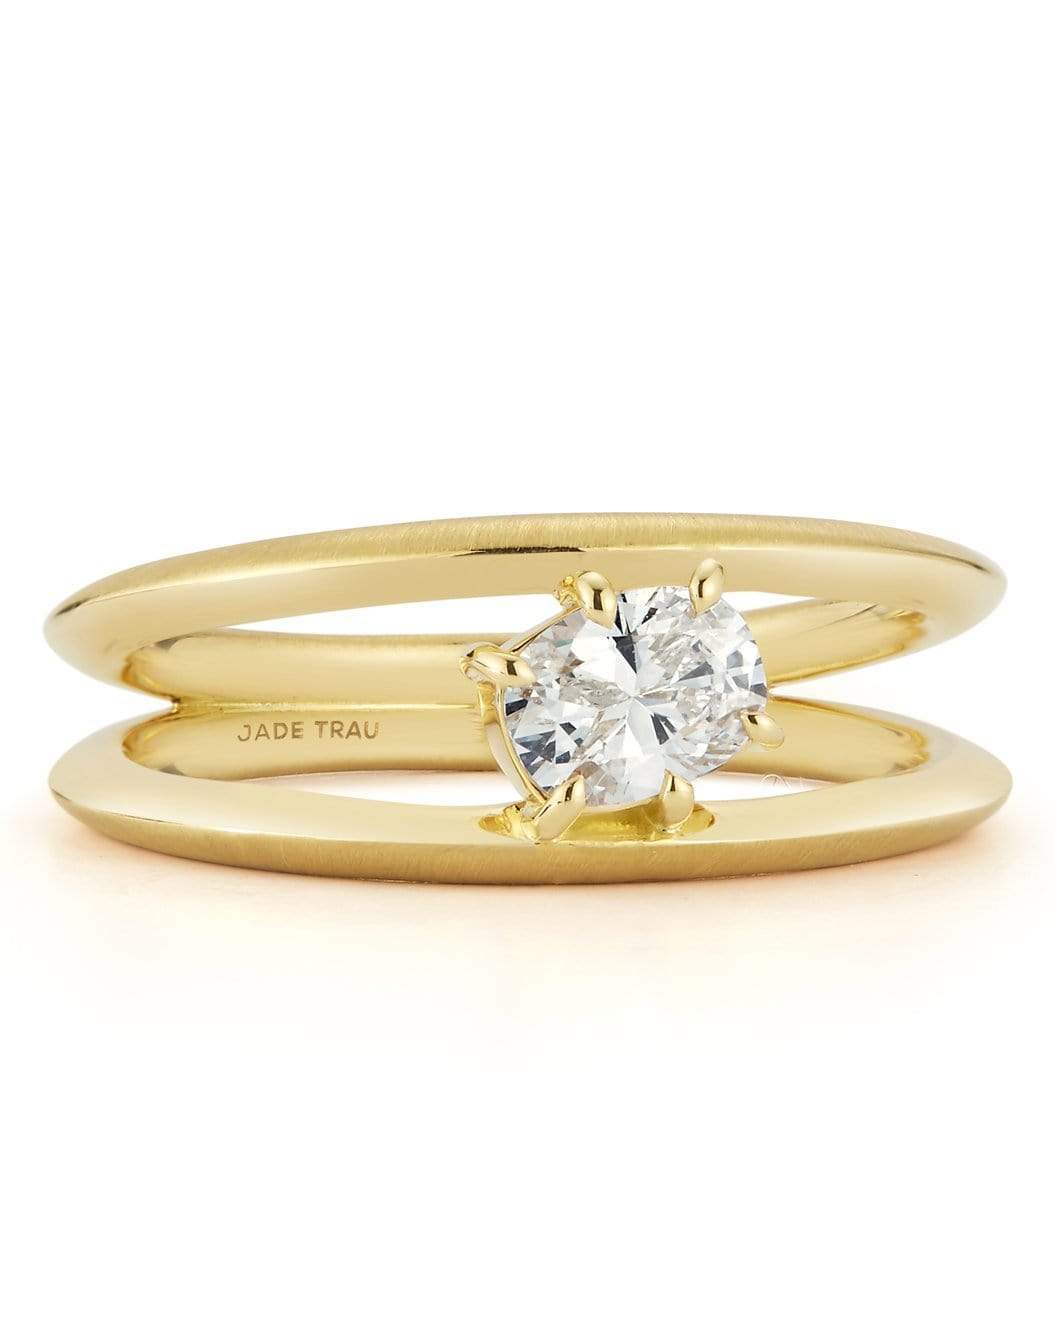 JADE TRAU-Sadie Oval Diamond Solitaire Ring-YELLOW GOLD